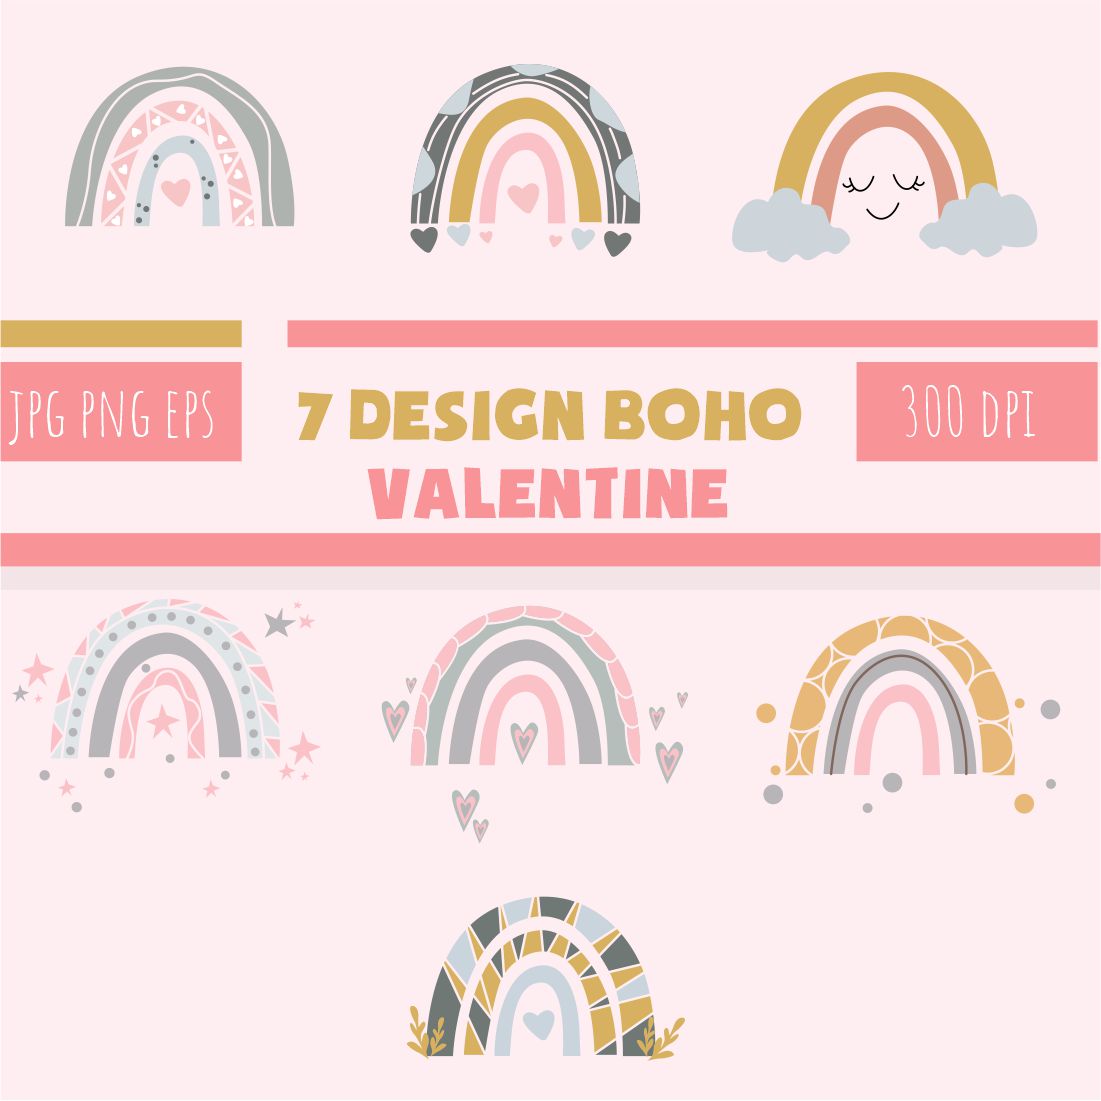 Unique Boho Valentine Bundle Design main cover.